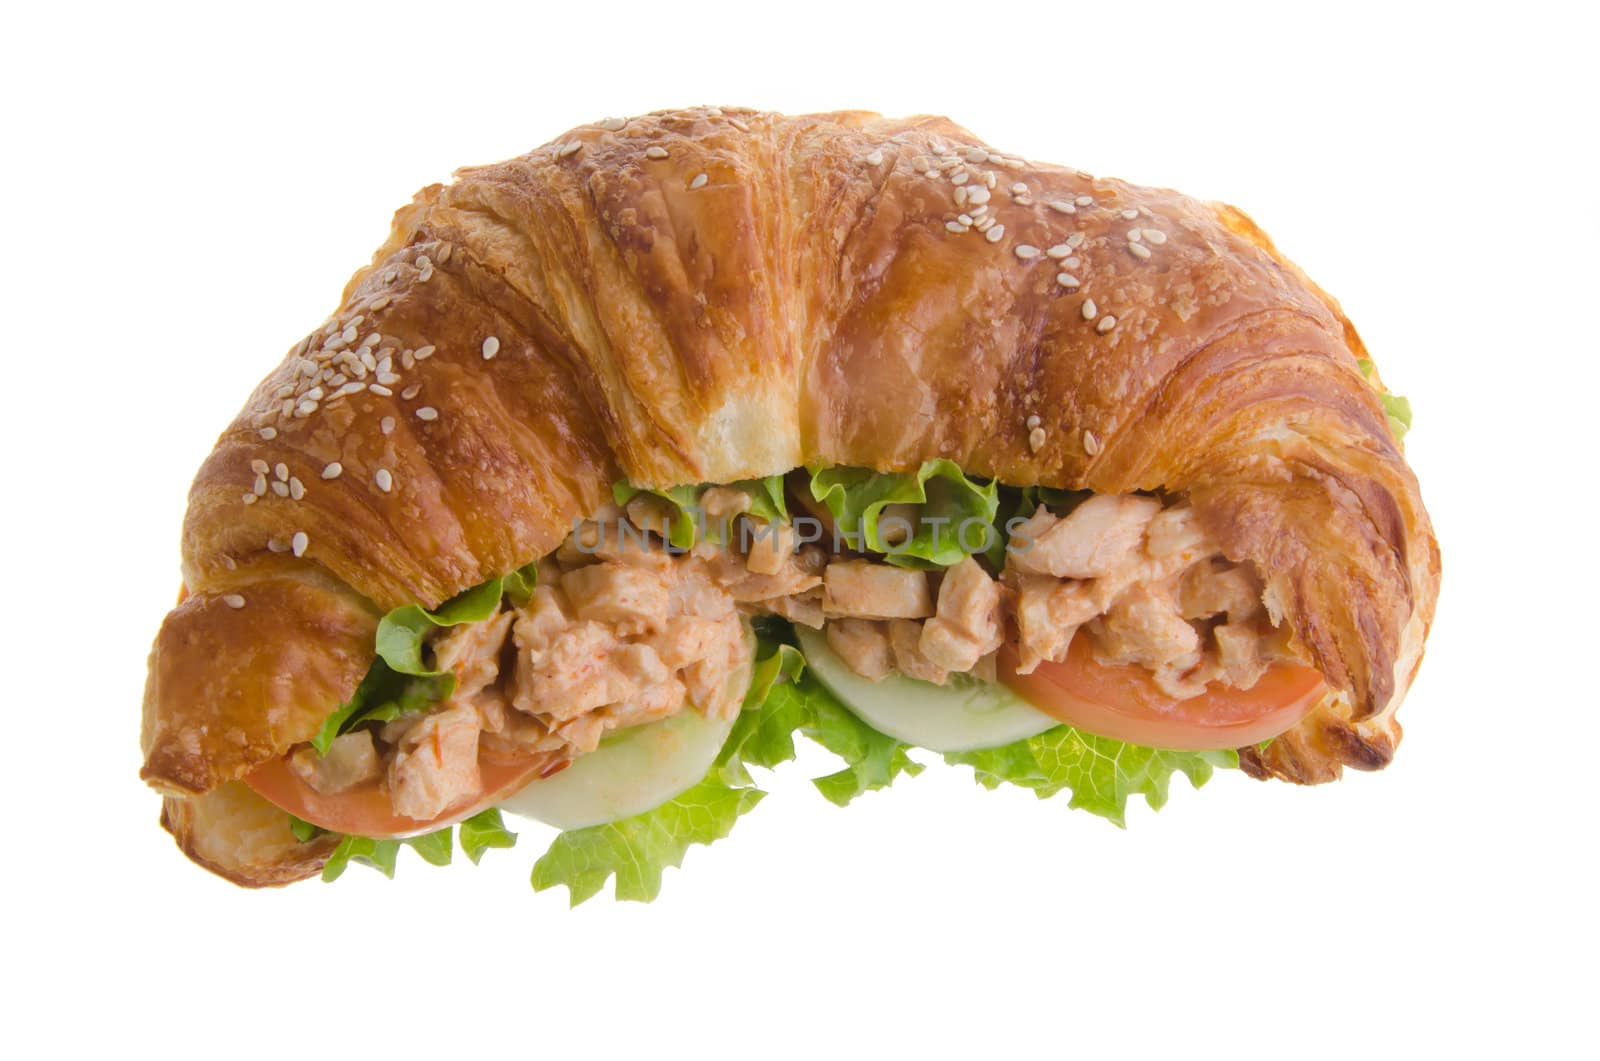 sandwich, croissant sandwich, fast food for breakfast or lunch.